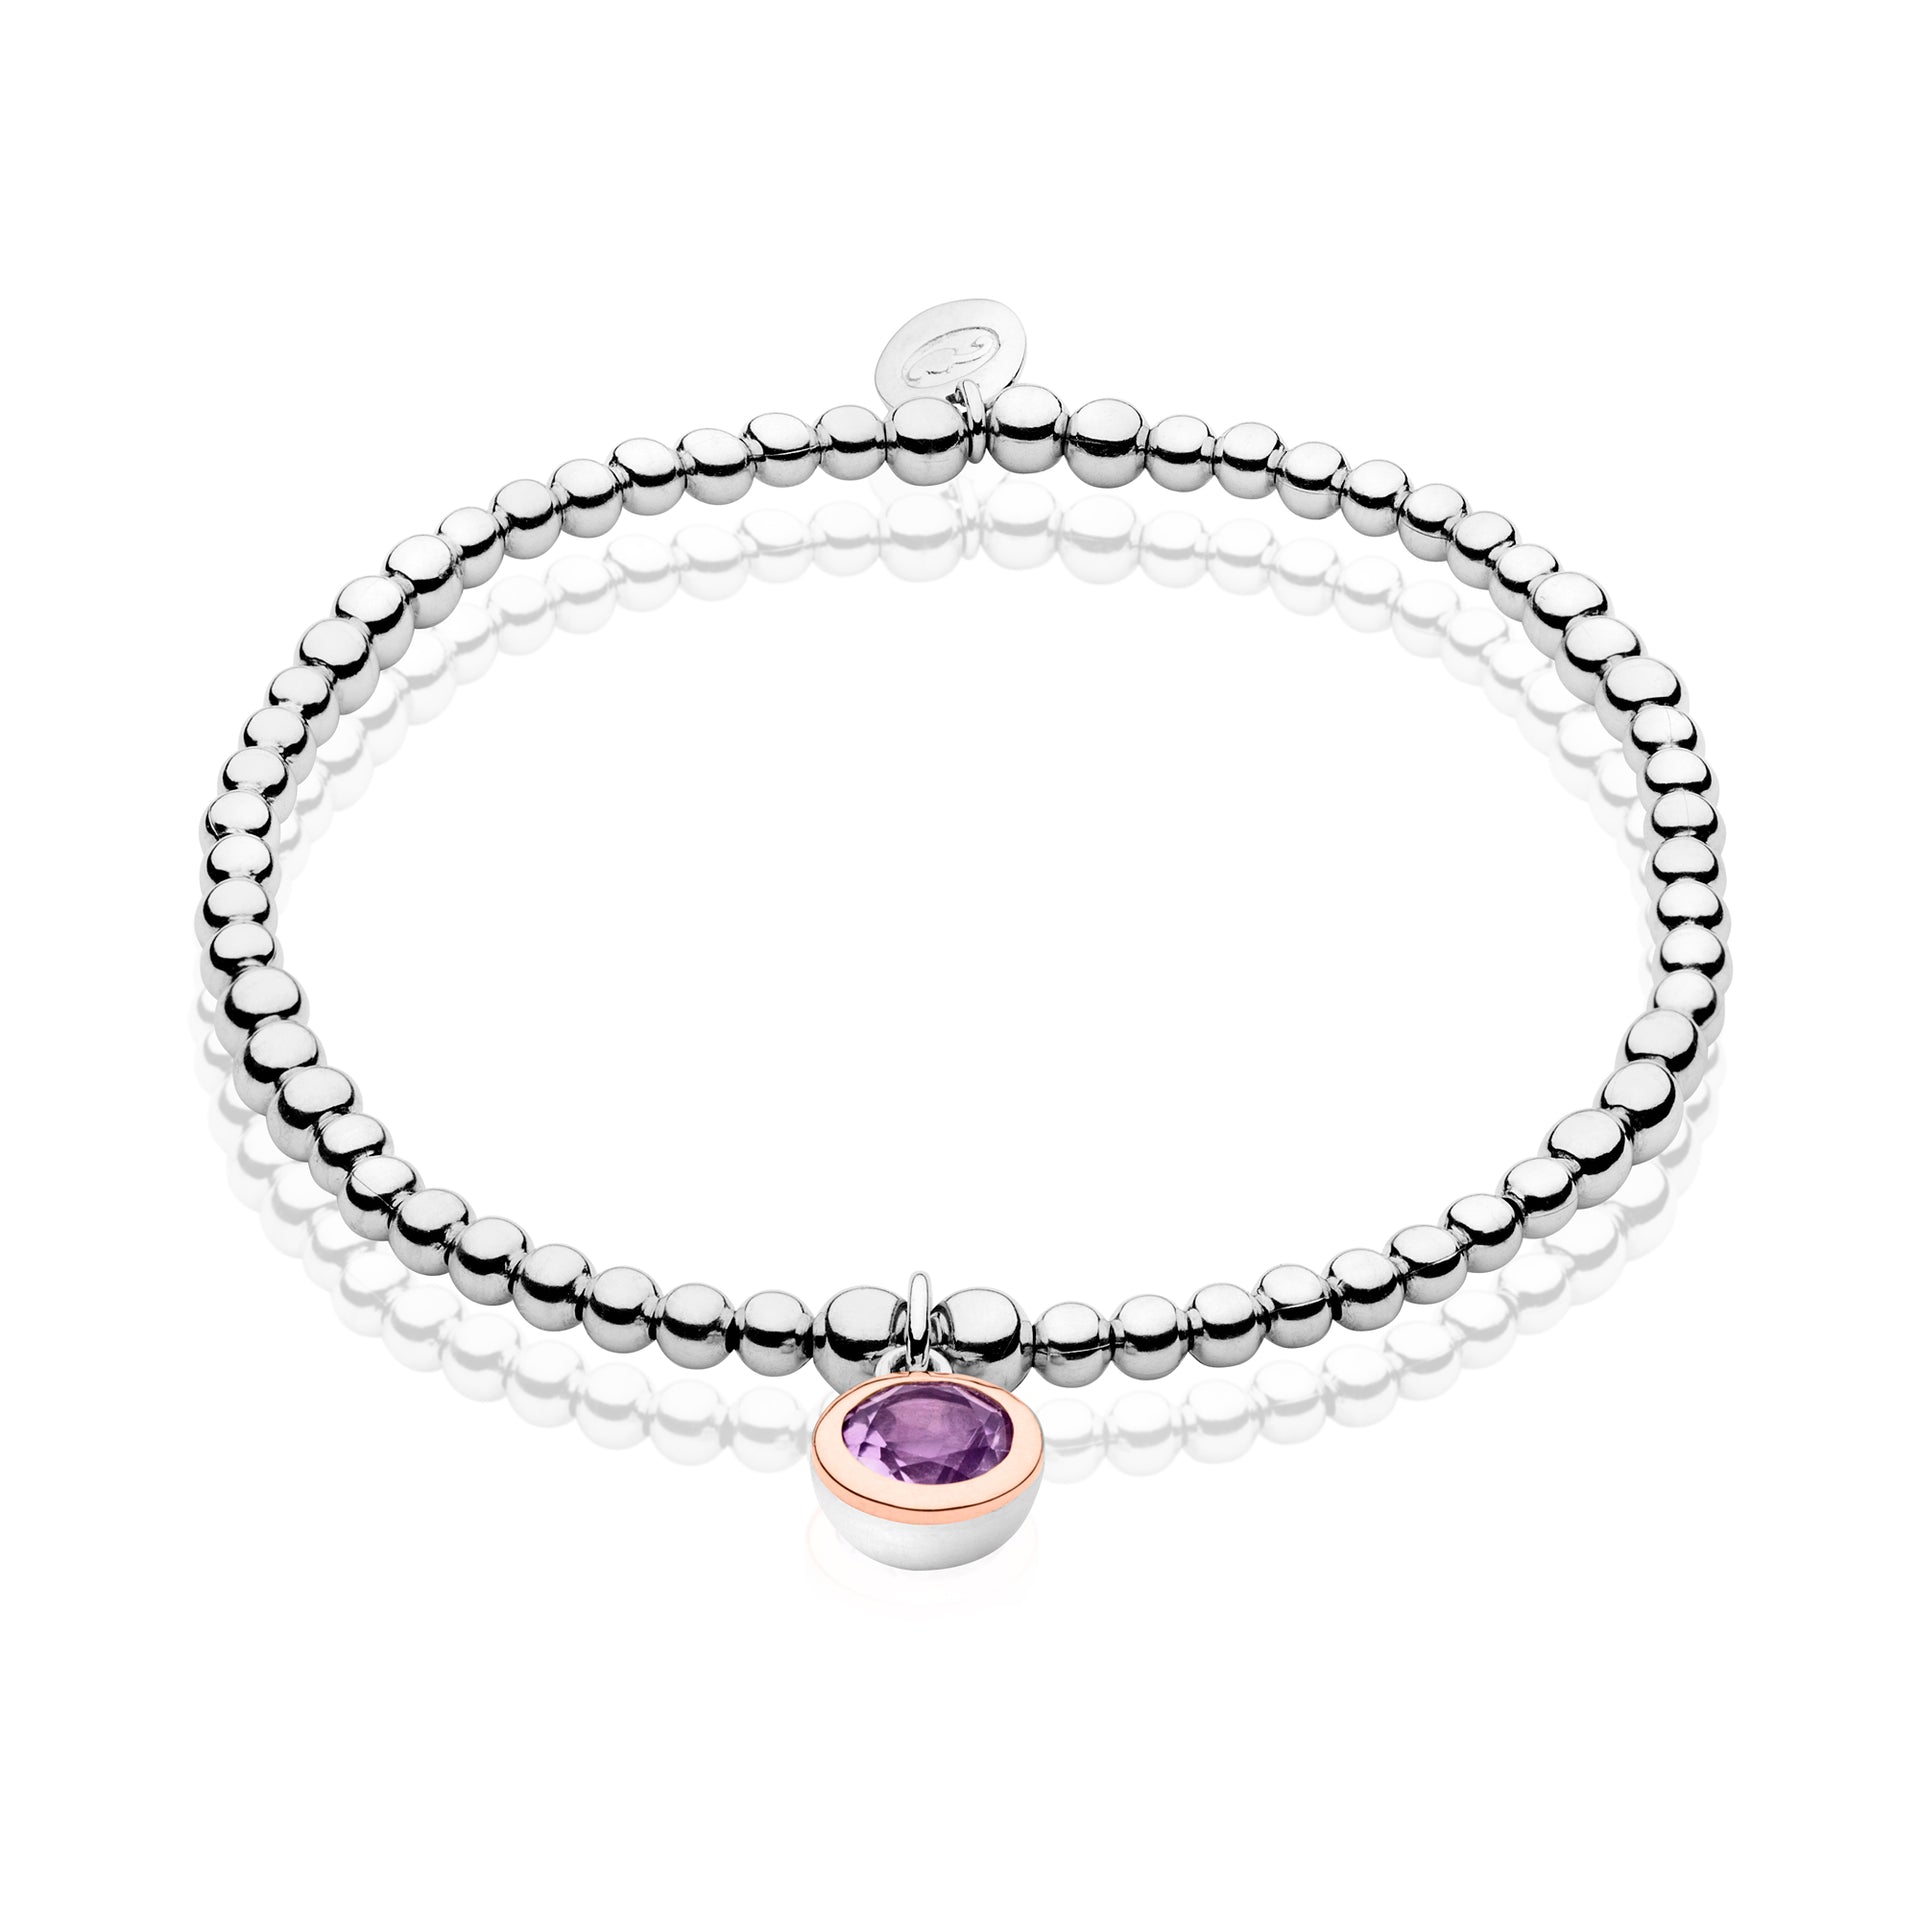 Birthstone Silver and Amethyst Affinity Bracelet – February